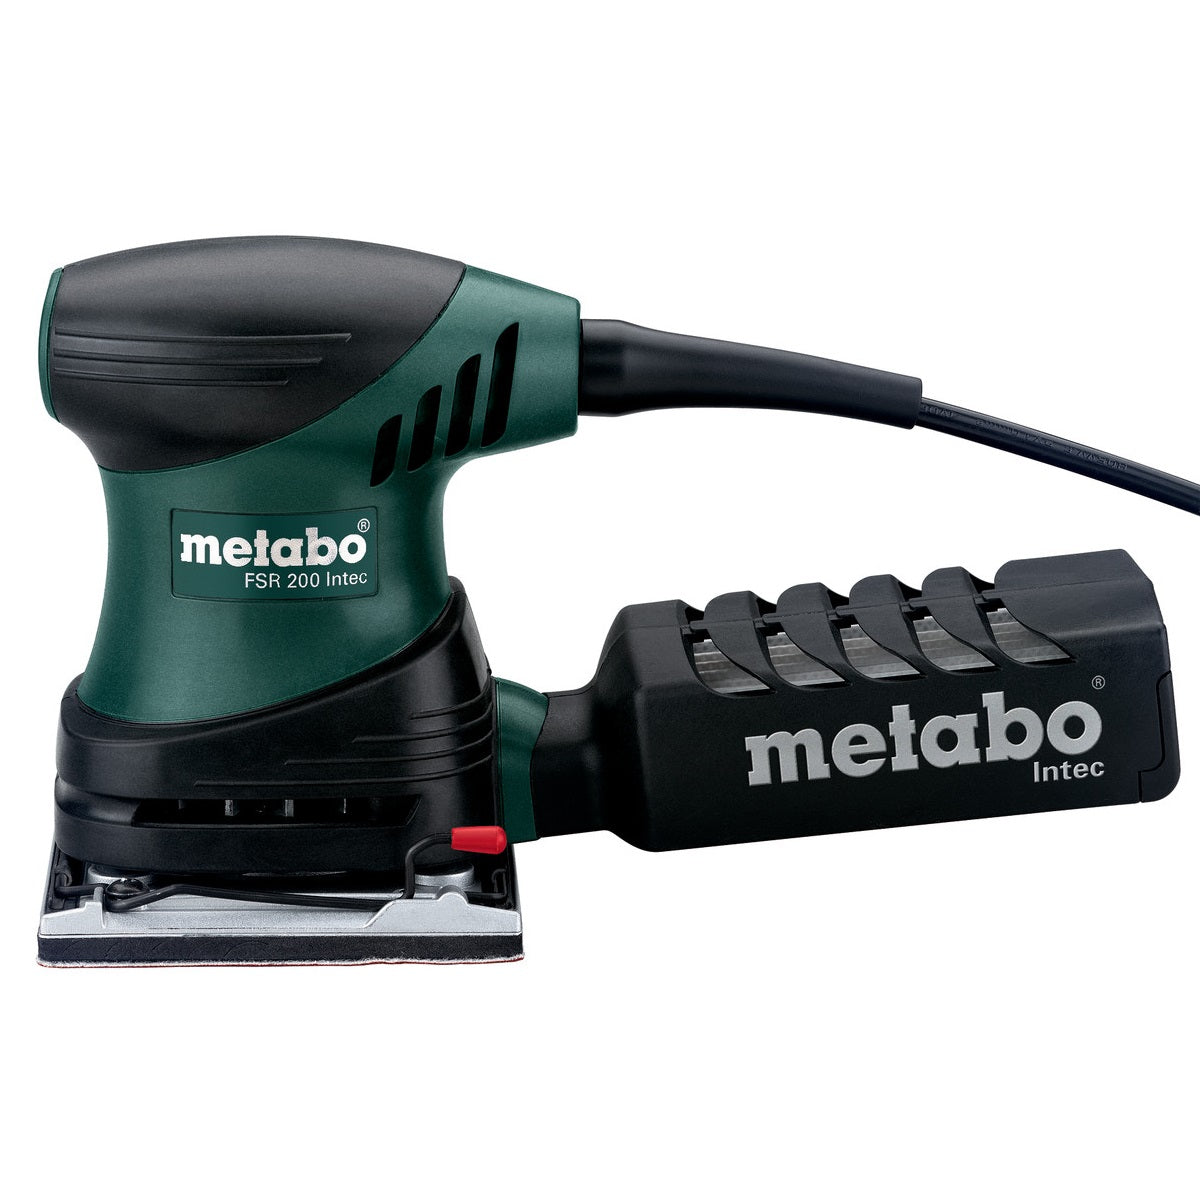 Metabo FSR 200 Intec 240V, 200W 1/4" Orbital Palm Sander